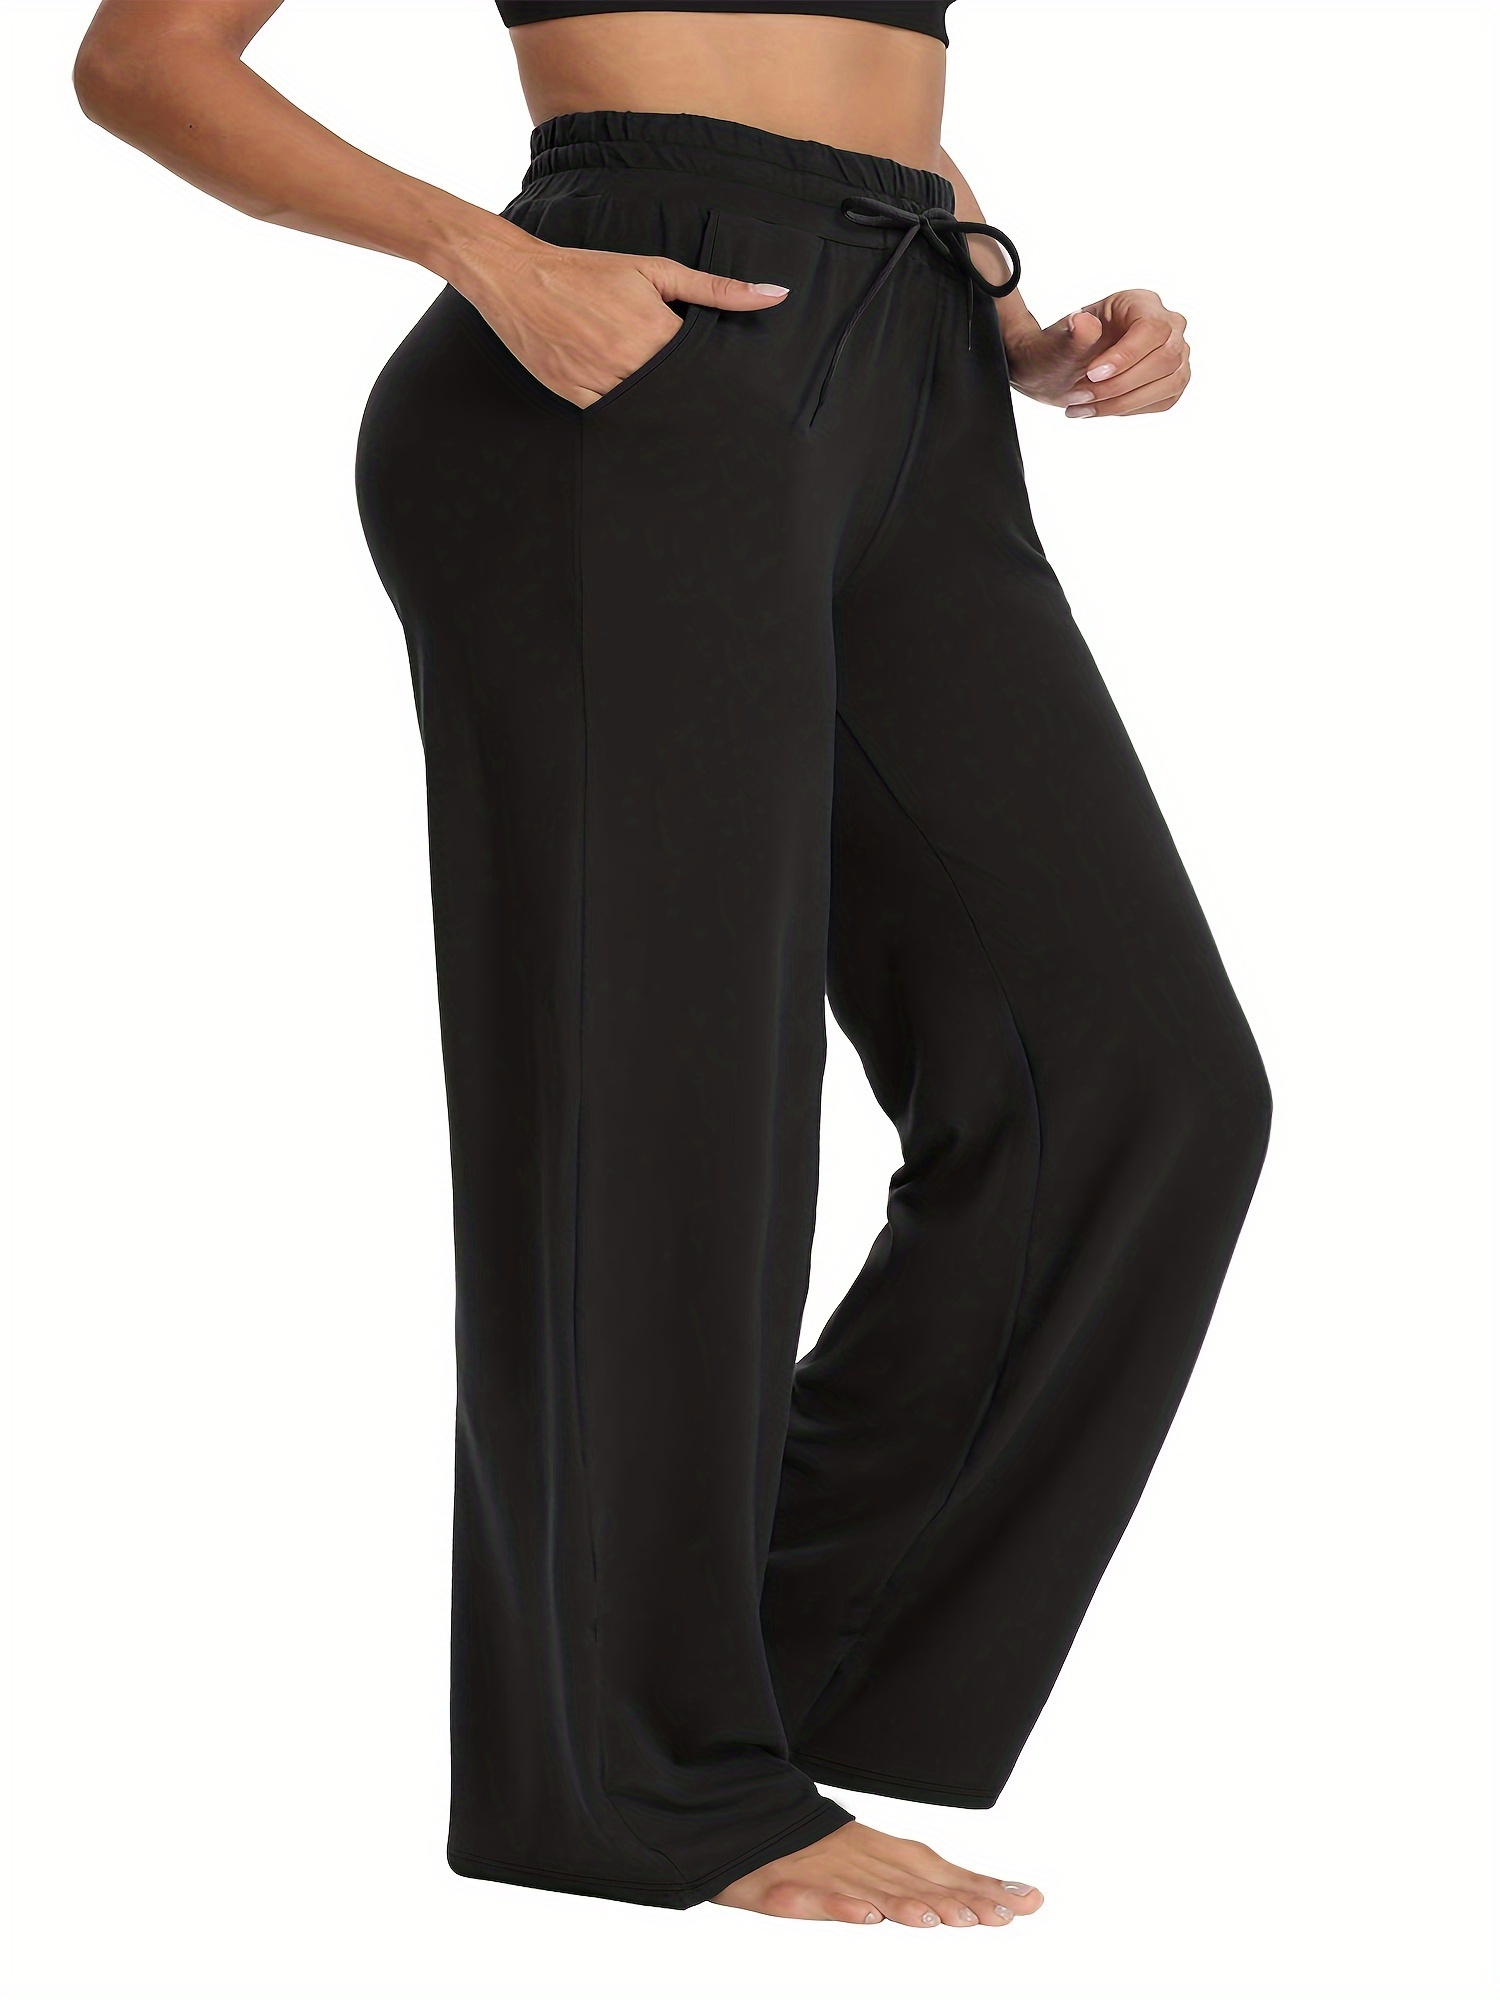 Yoga Tokong Pants for PLUS SIZE Women [TENESSY] - Medium to XL